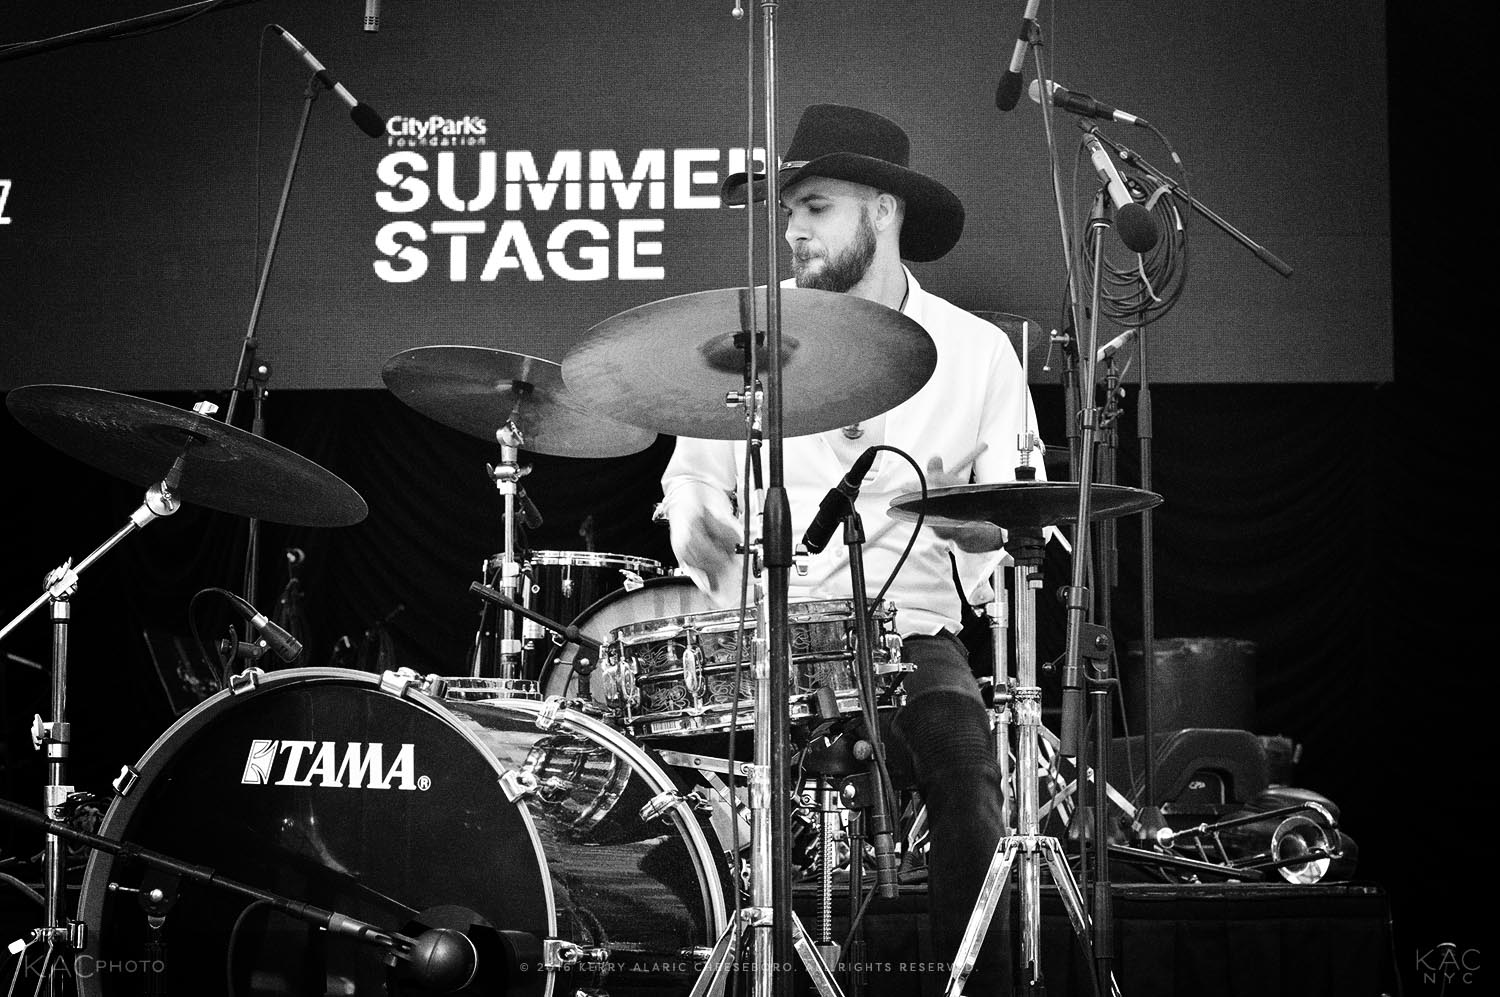 kac_photo-160701-summerstage-bria-allstars-joe-saylor-drummer-1-1500.jpg